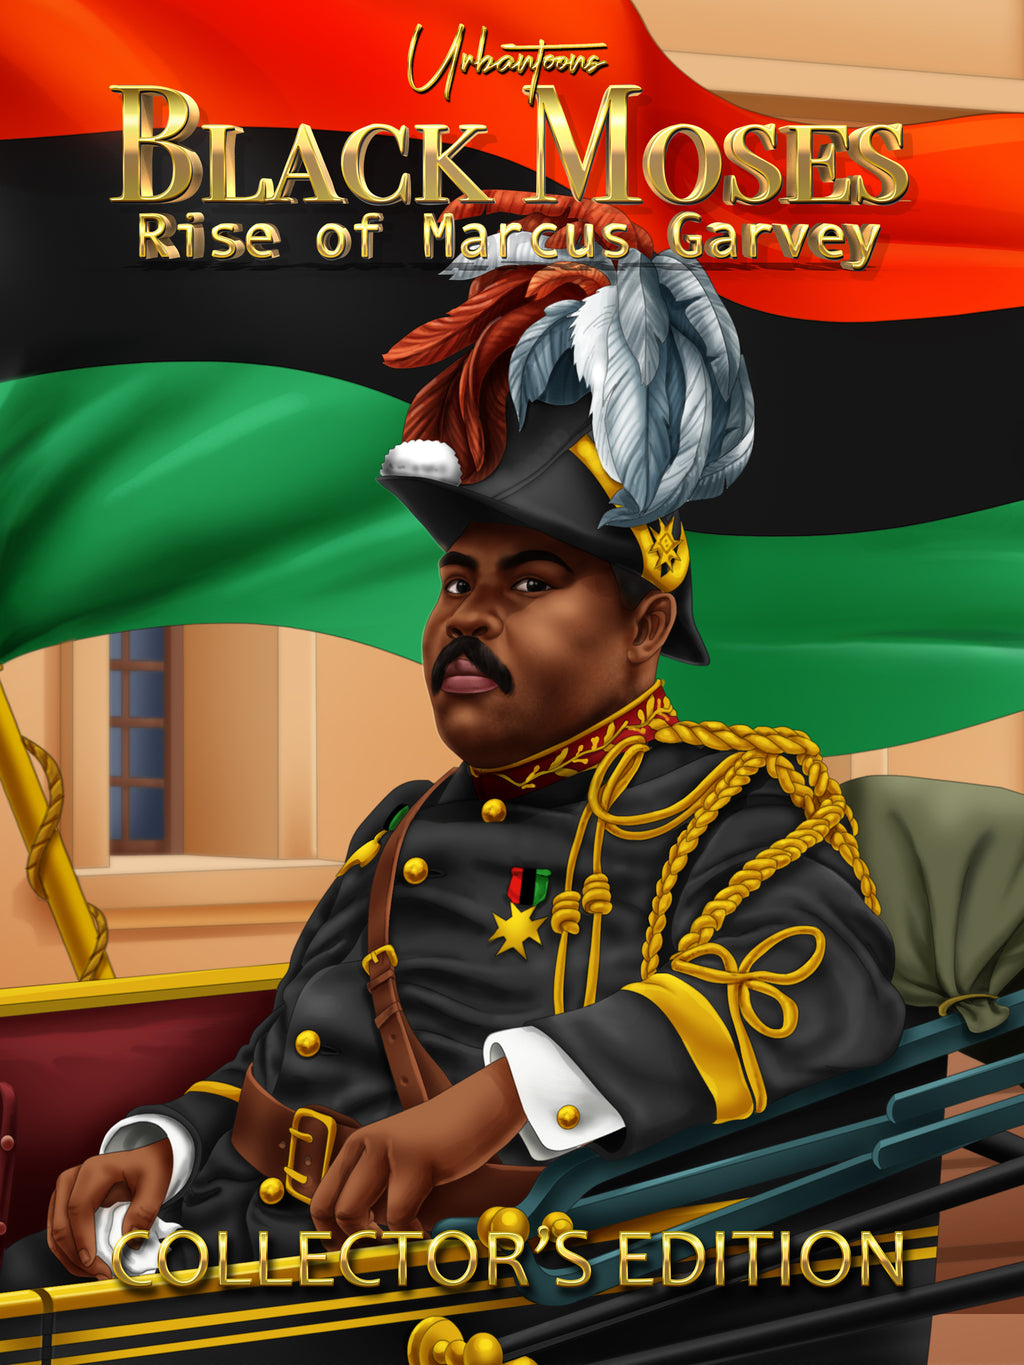 Black Princesses, Black princess Book, Black Prince book, Black King book, Black Princess children's book, Marcus Garvey children's book